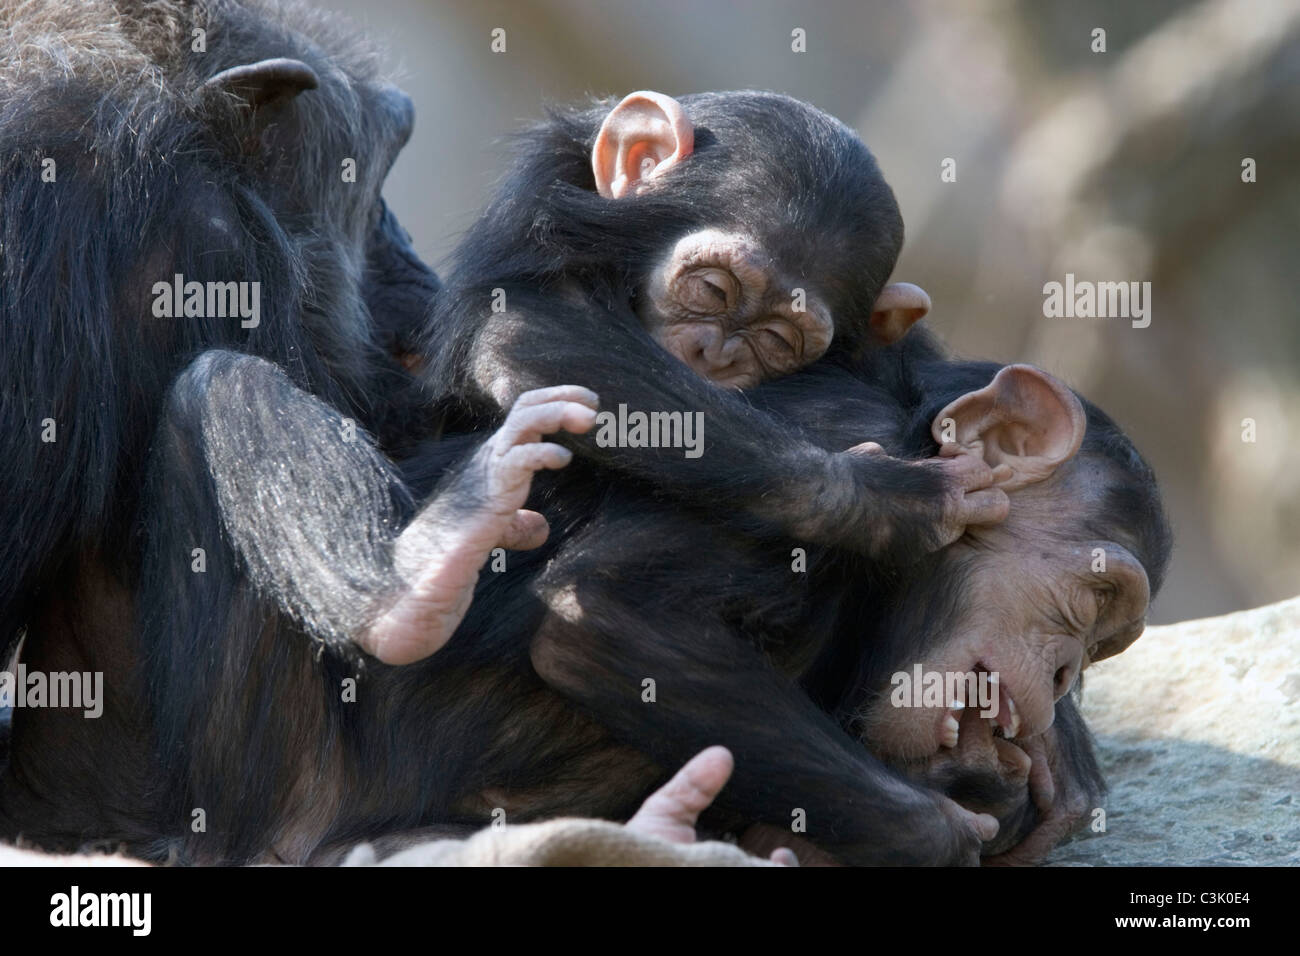 Junge Schimpansen beim Spielen, Pan troglodytes, Common chimpanzee playing Stock Photo